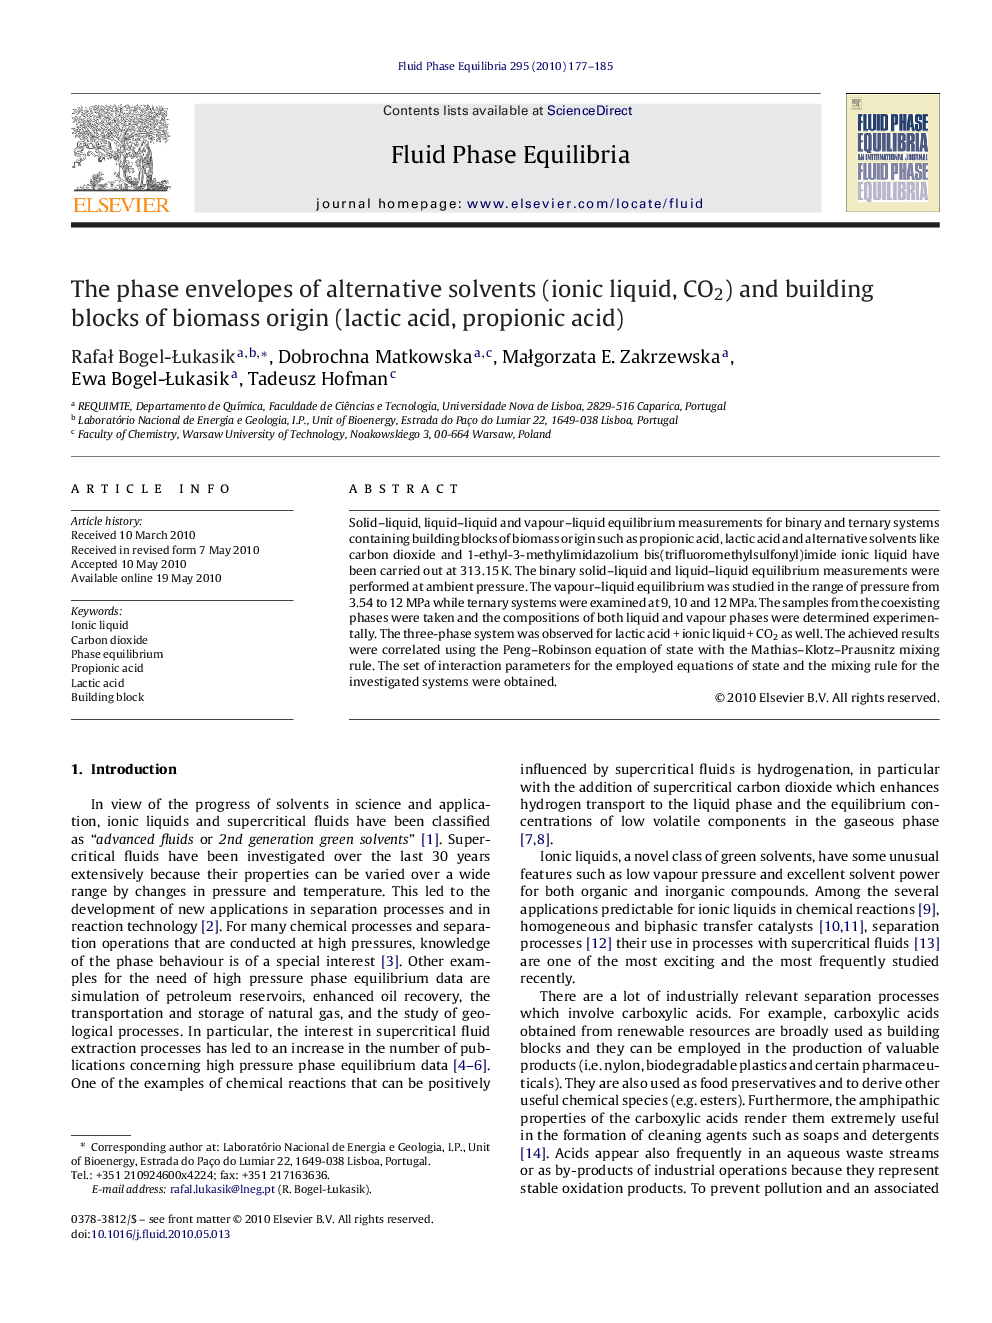 The phase envelopes of alternative solvents (ionic liquid, CO2) and building blocks of biomass origin (lactic acid, propionic acid)